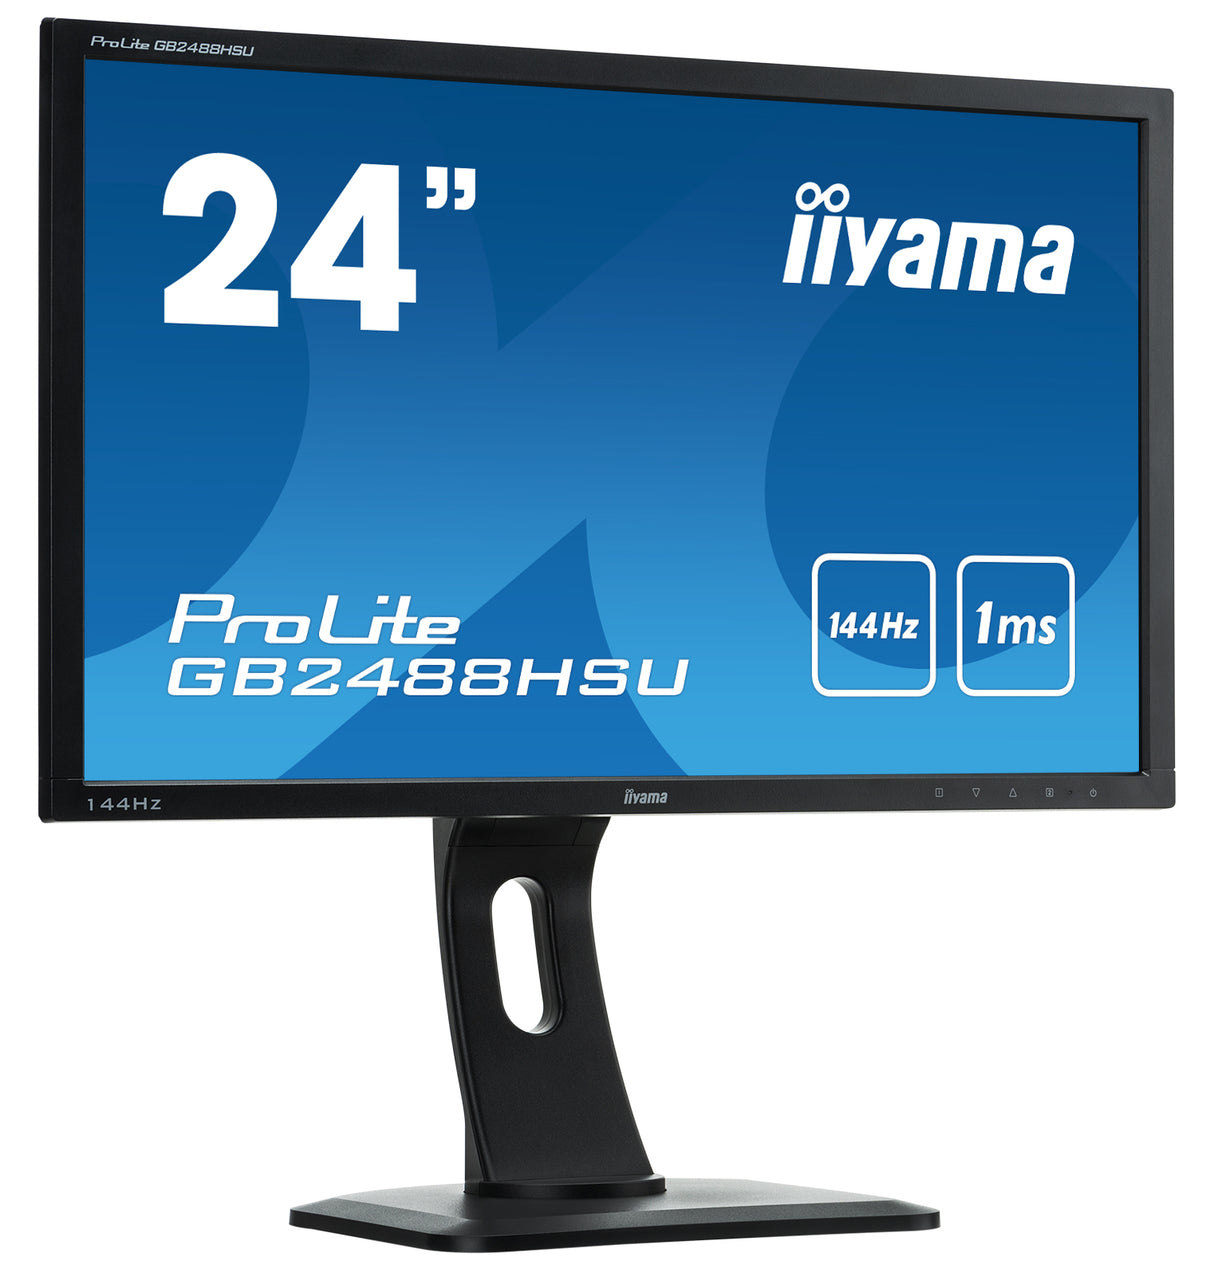 Iiyama ProLite GB2488HSU Monitor - Black - Refurbished Excellent